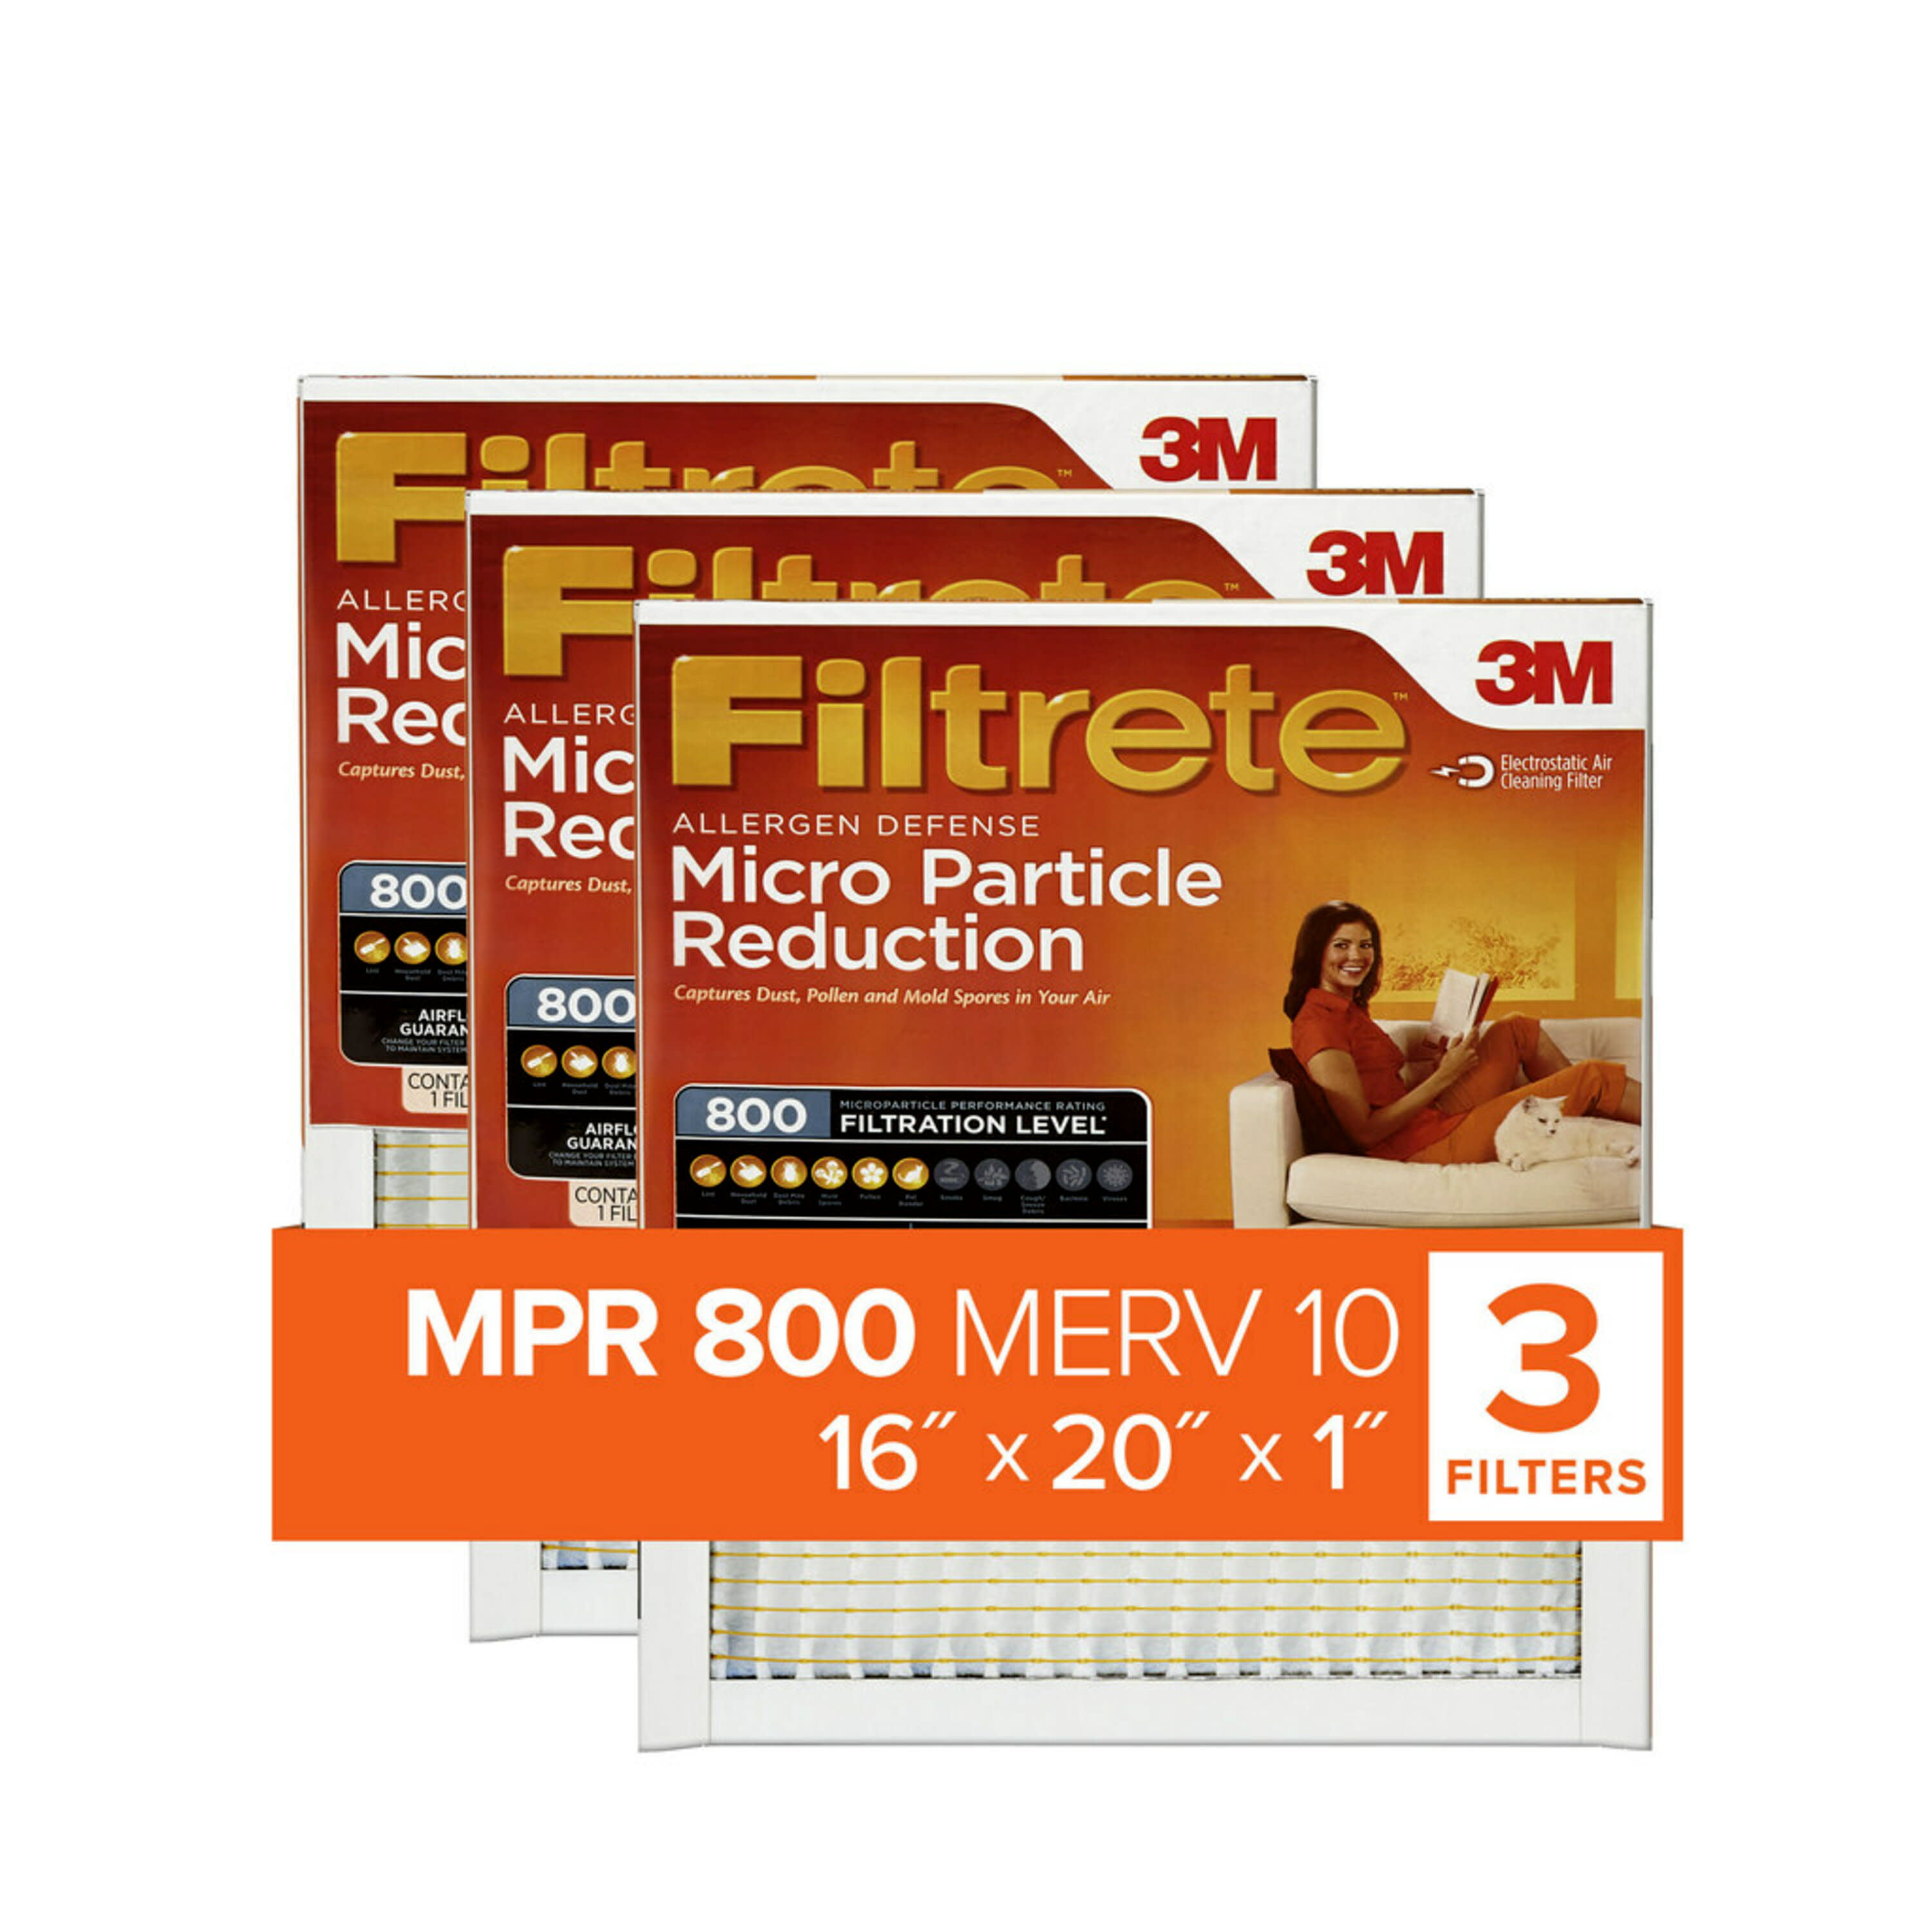 filtrete-10x20x1-healthy-living-advanced-allergen-reduction-hvac